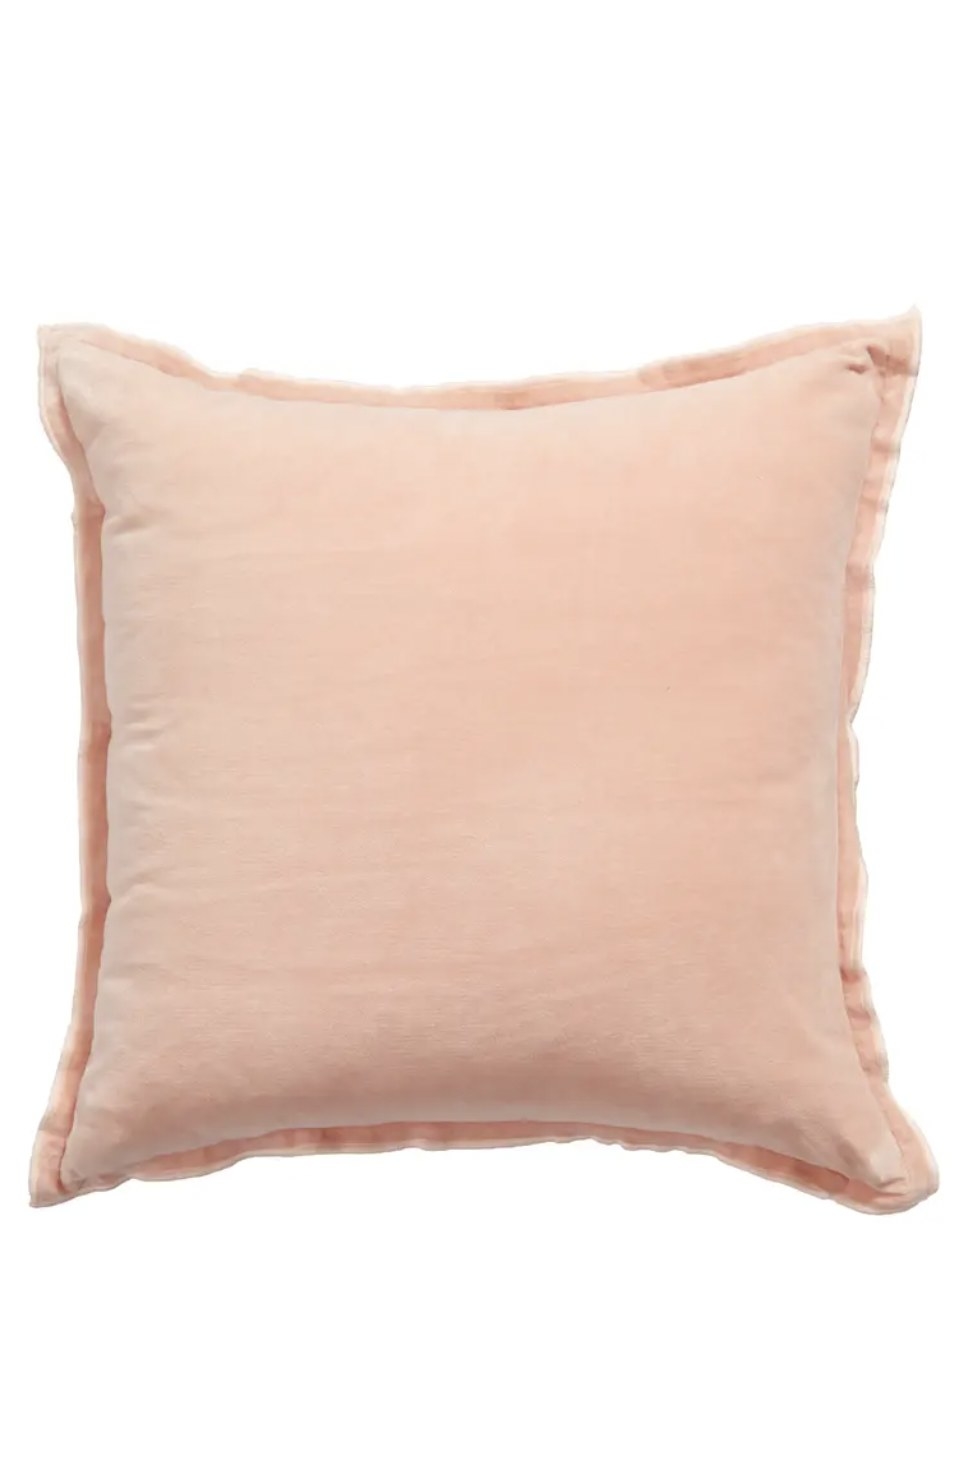 the pink velvety throw pillow